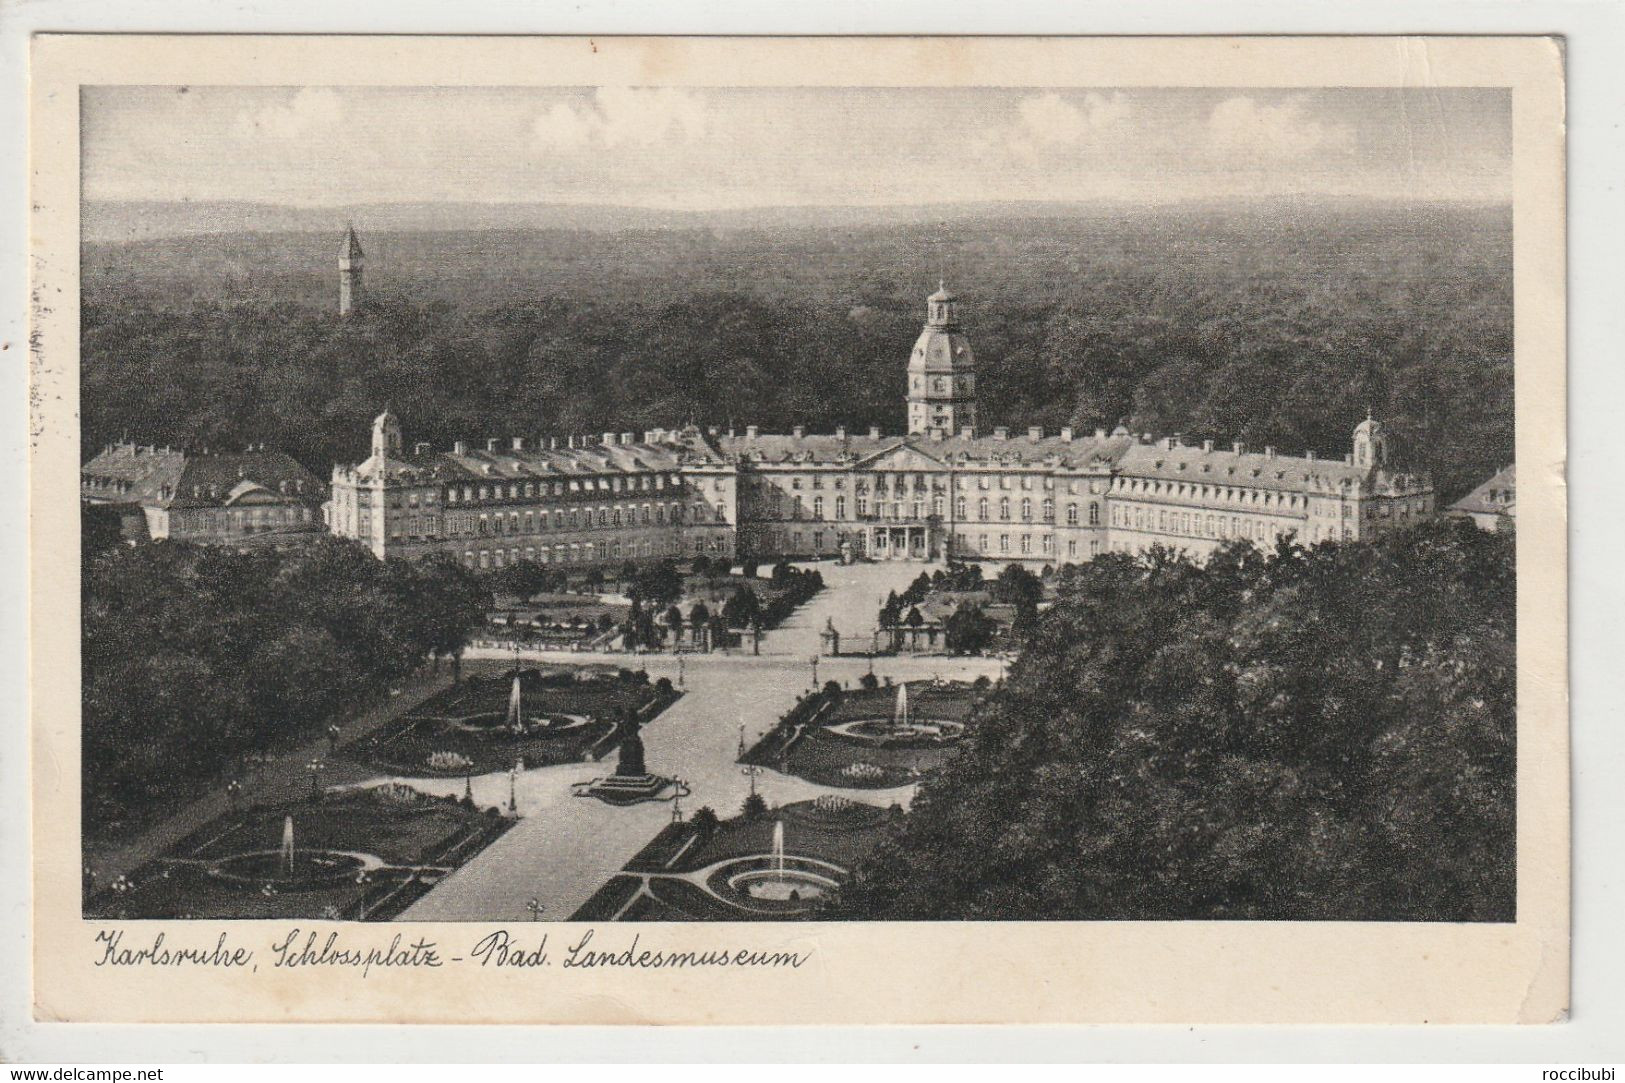 Karlsruhe, Schlossplatz, Bad. Landesmuseum, Baden-Württemberg - Karlsruhe